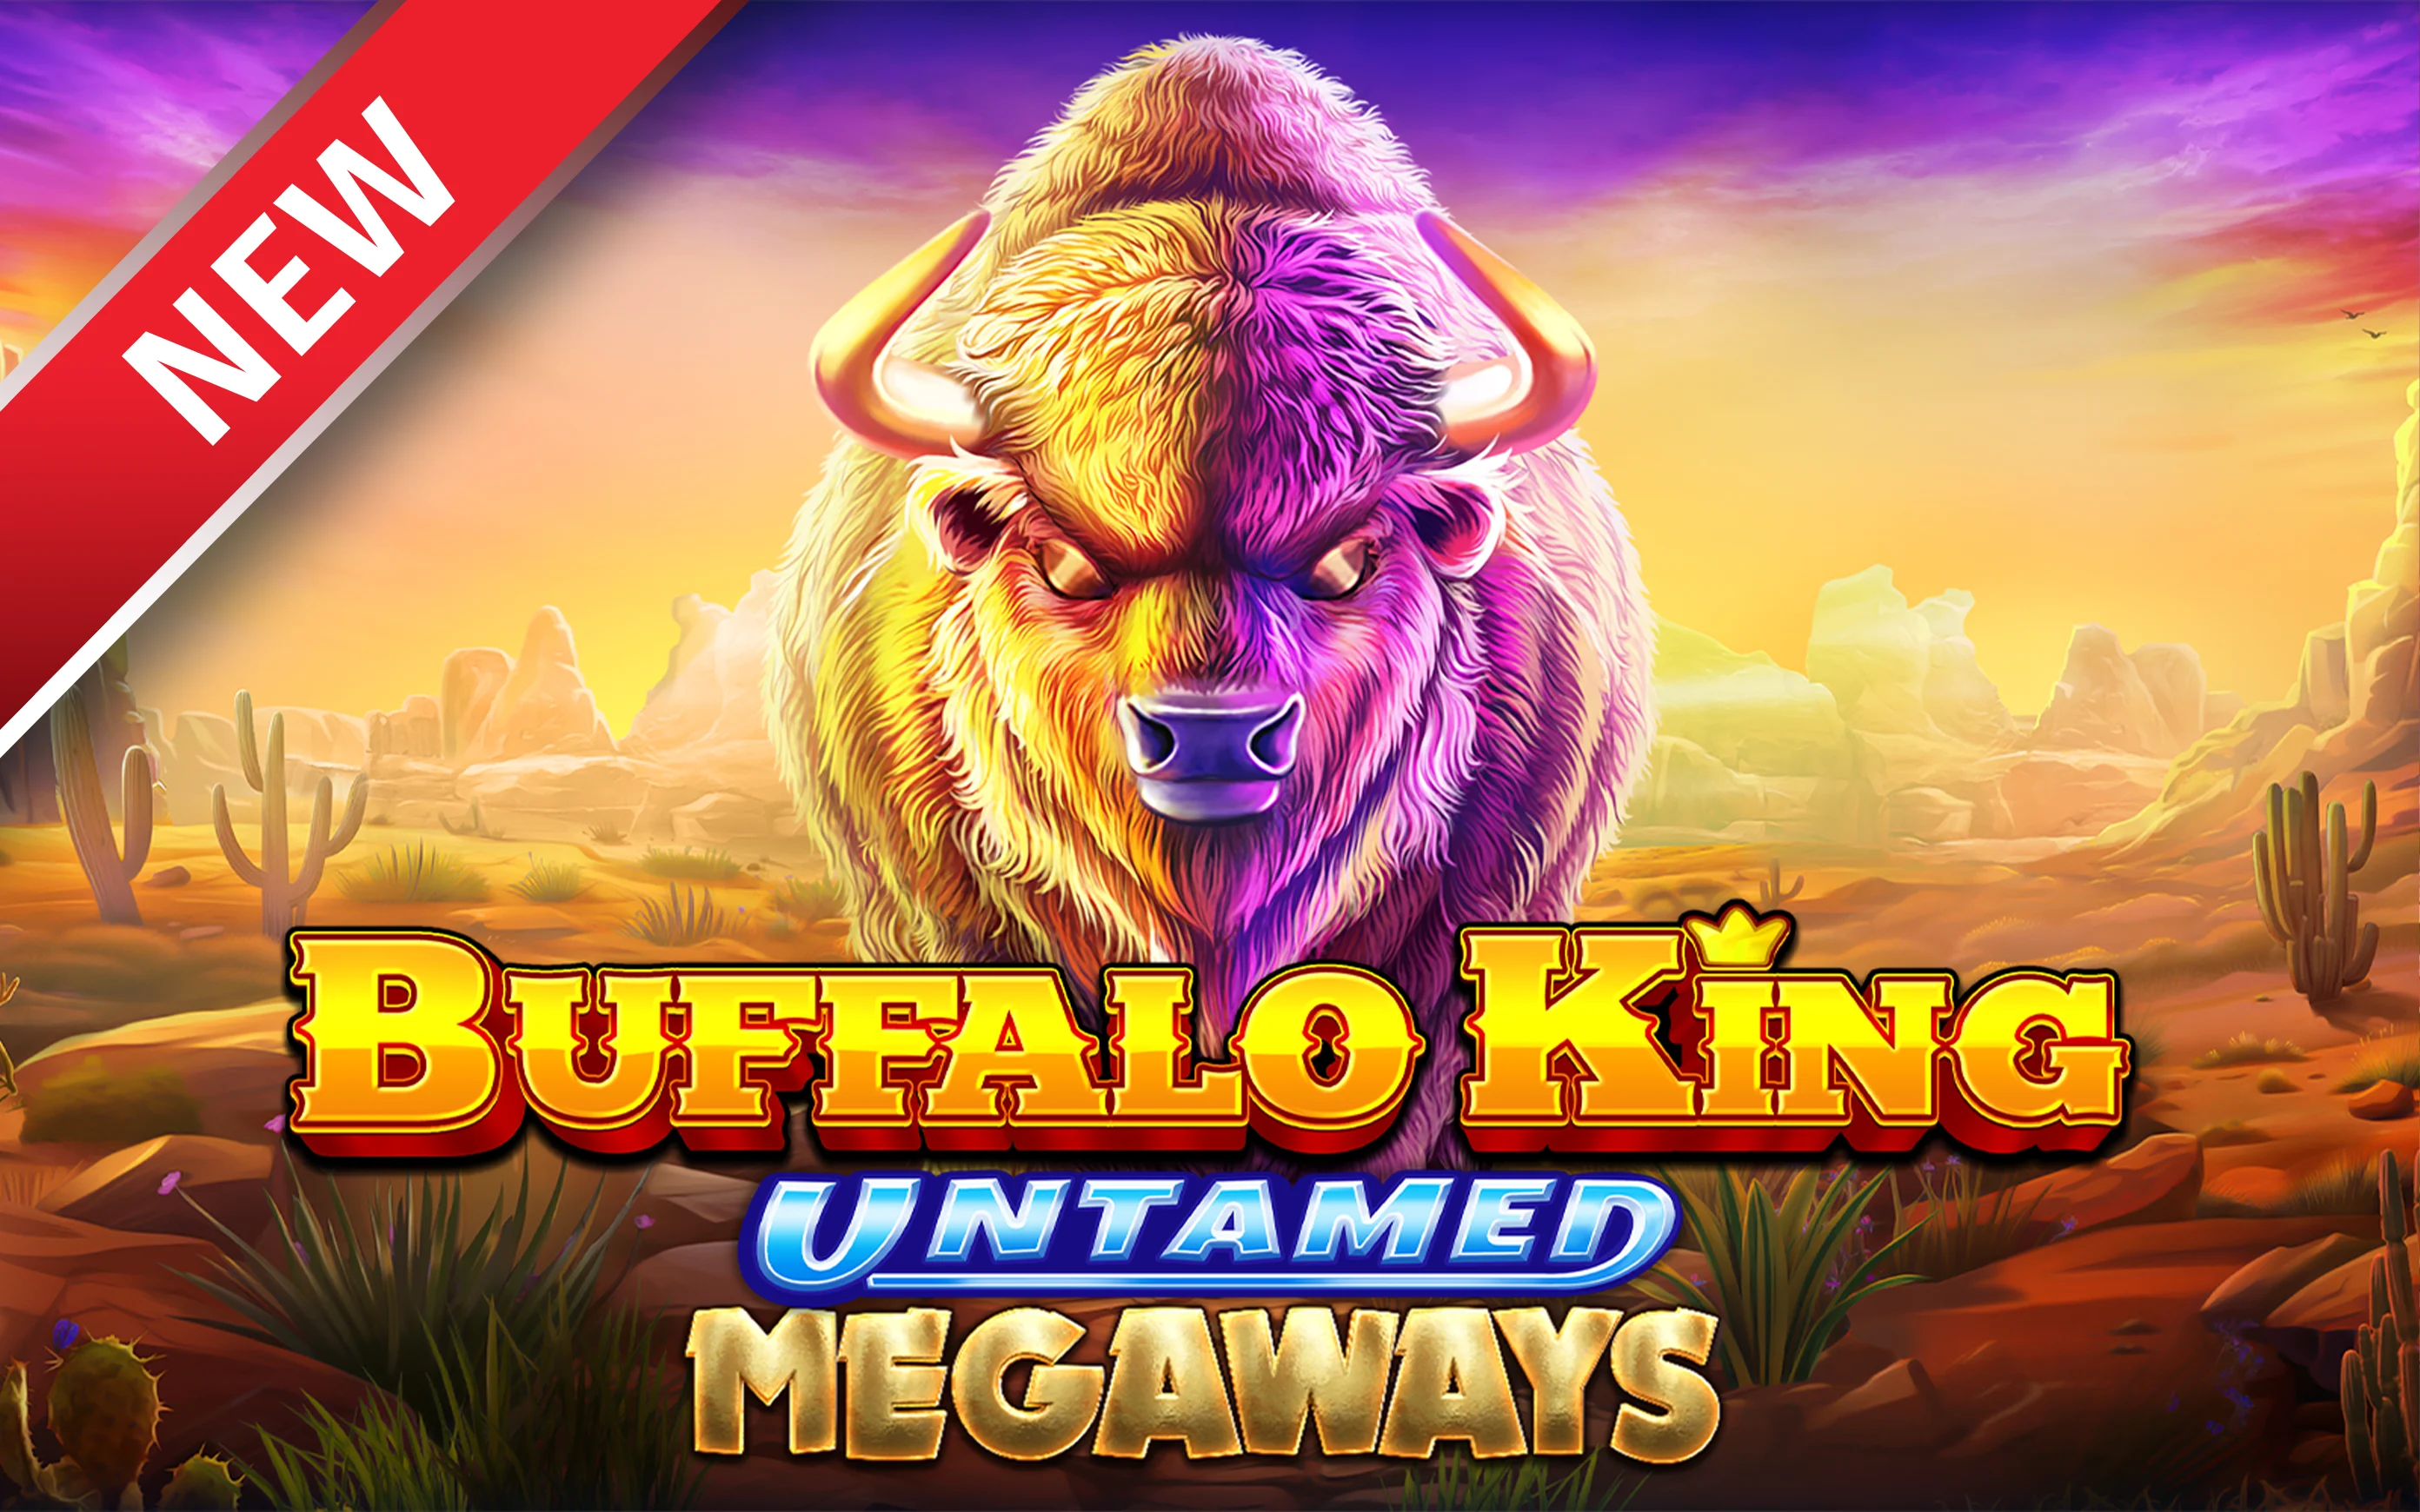 Joacă Buffalo King Untamed Megaways™ în cazinoul online Starcasino.be